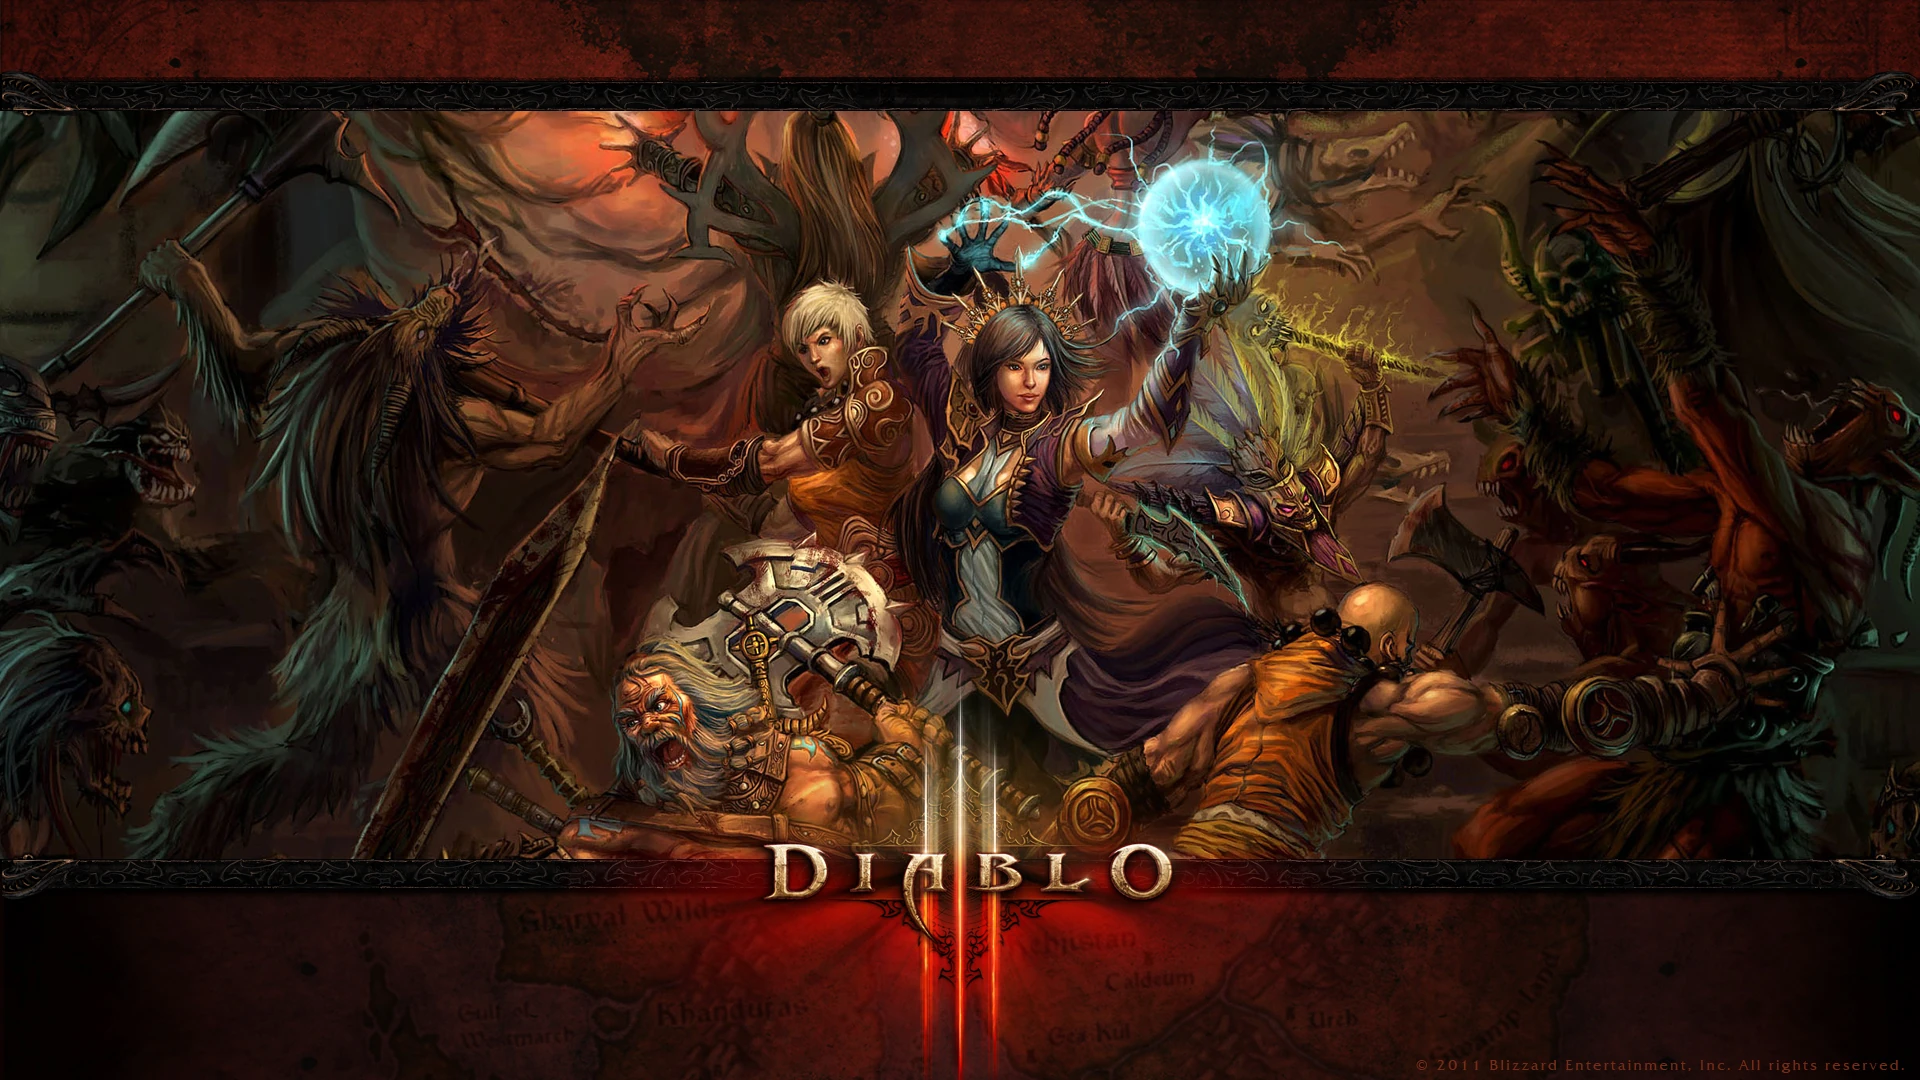 Diablo III - Papel de Parede com as classes do RPG da Blizzard - Wallpaper Full HD 1920x1080